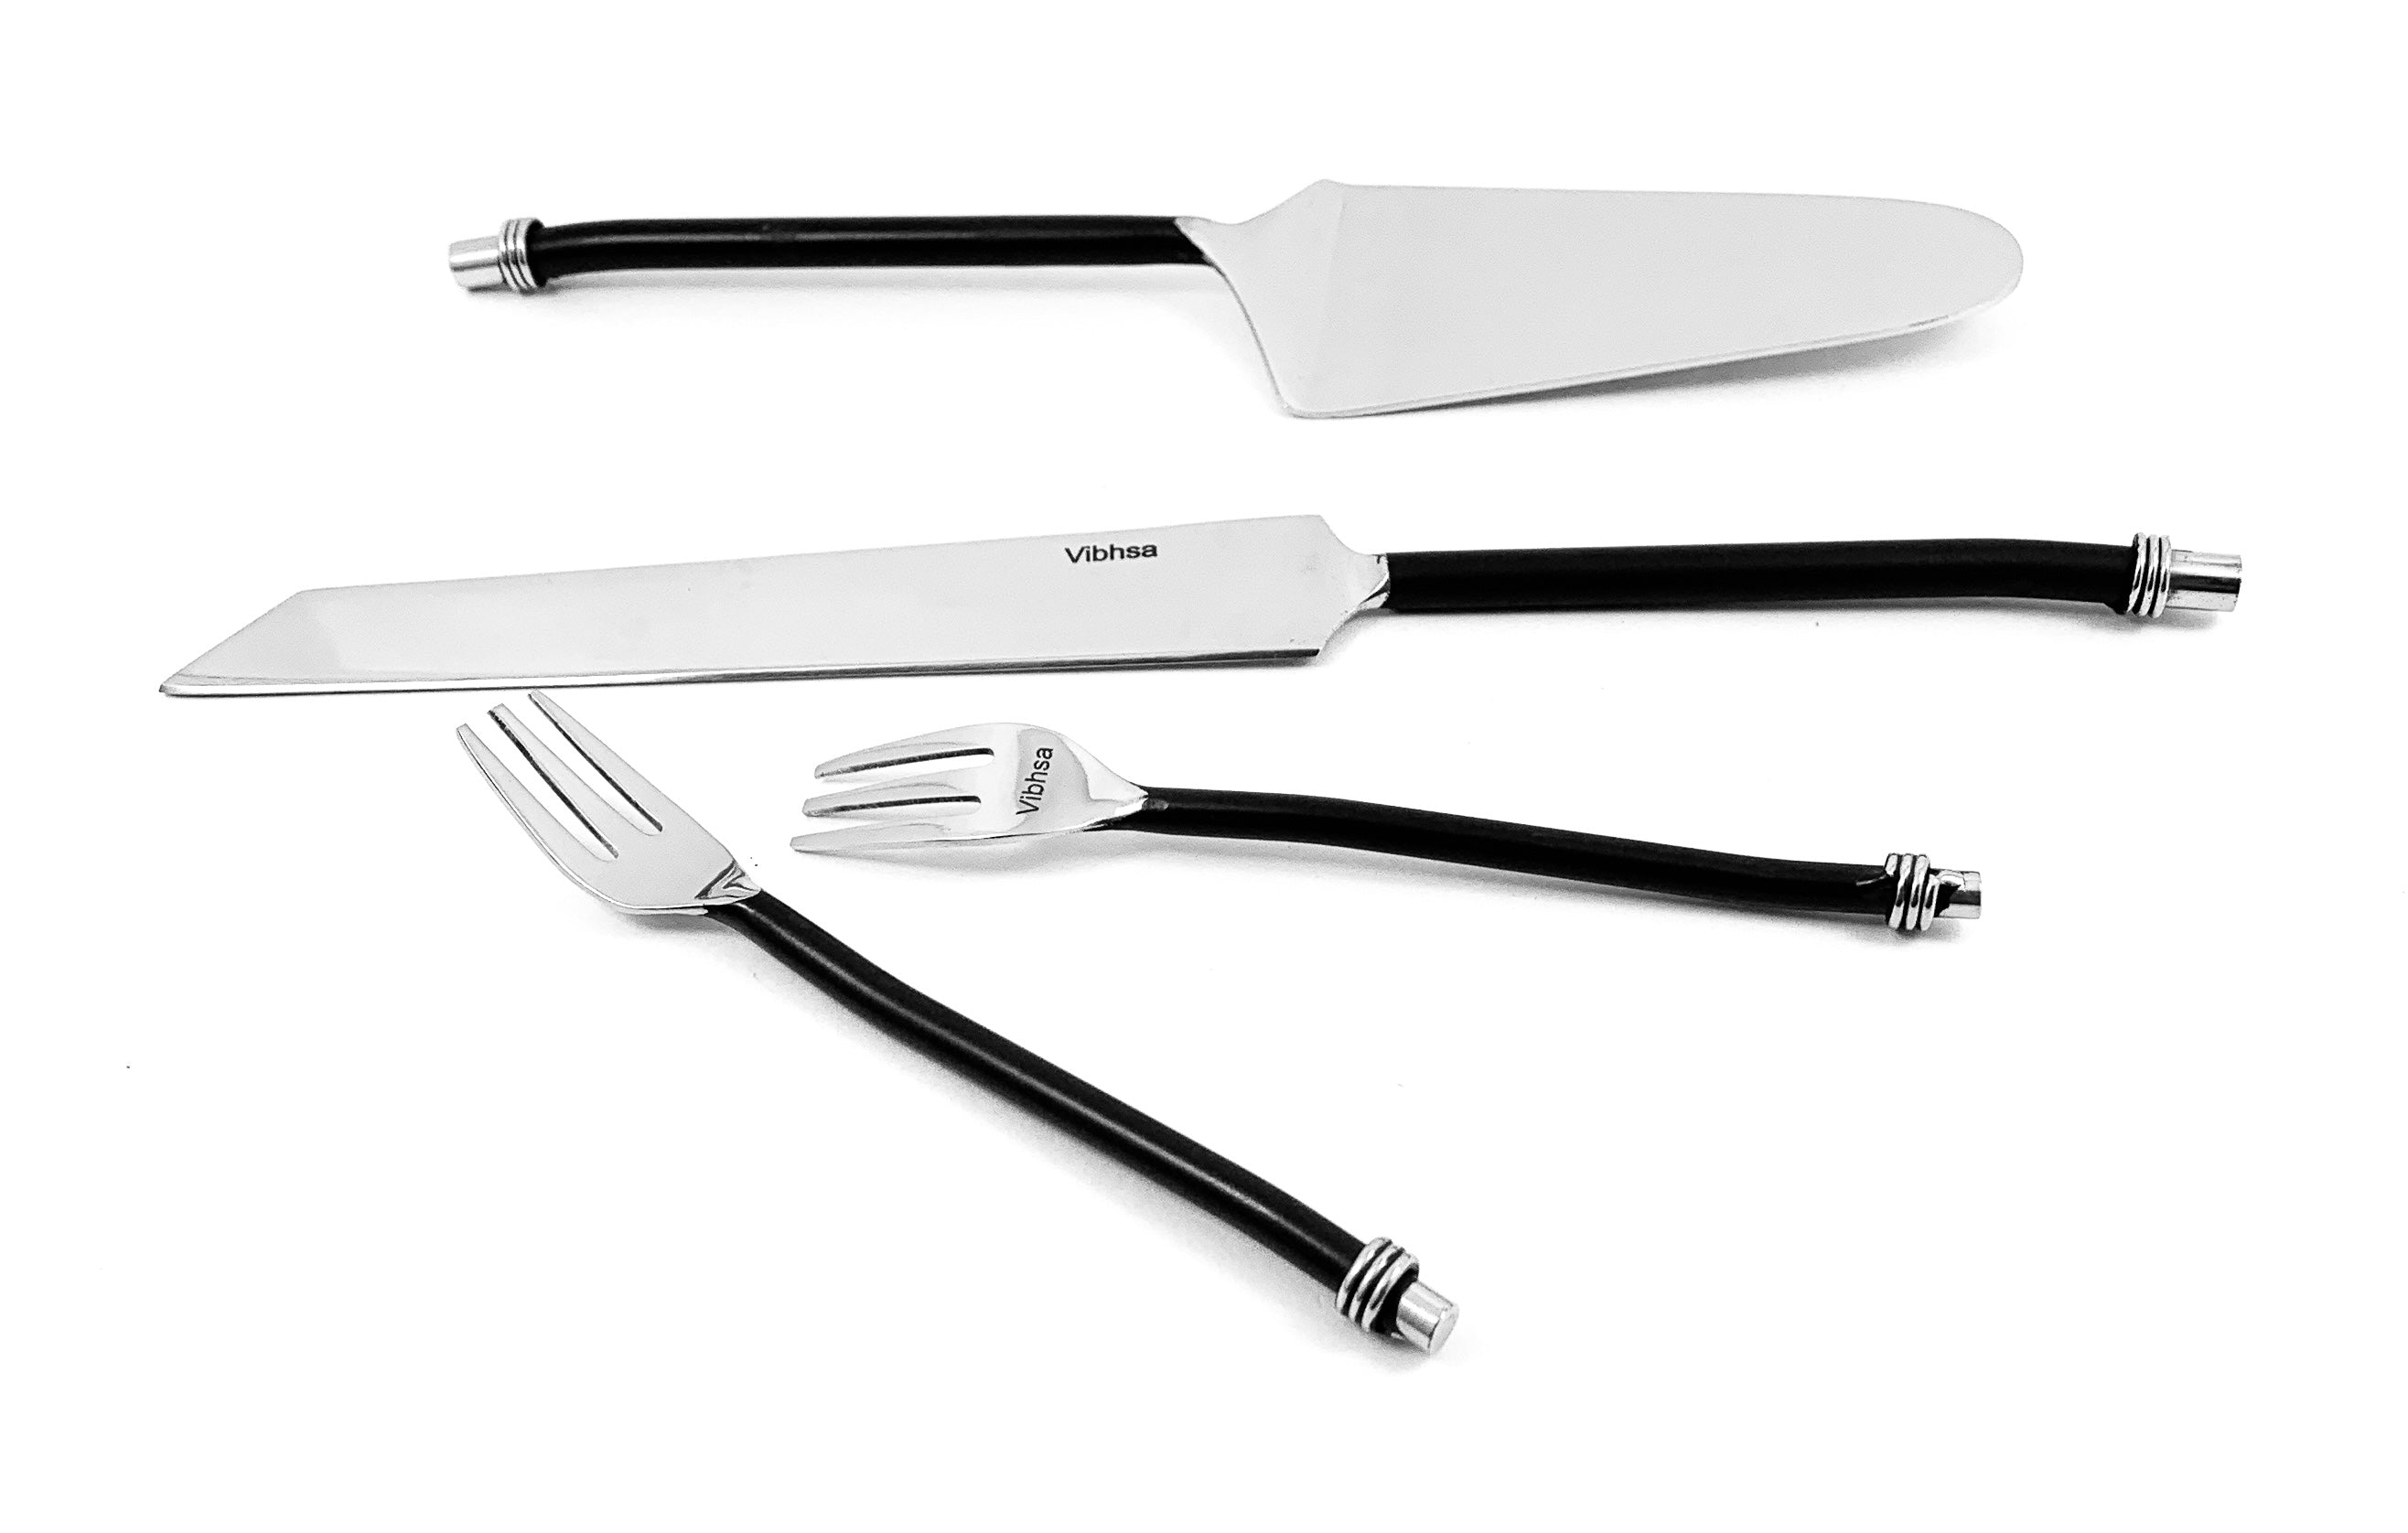 VIBHSA Vibhsa Cake Server, Knife and Cake Forks Set (Black, Twisted Handle)